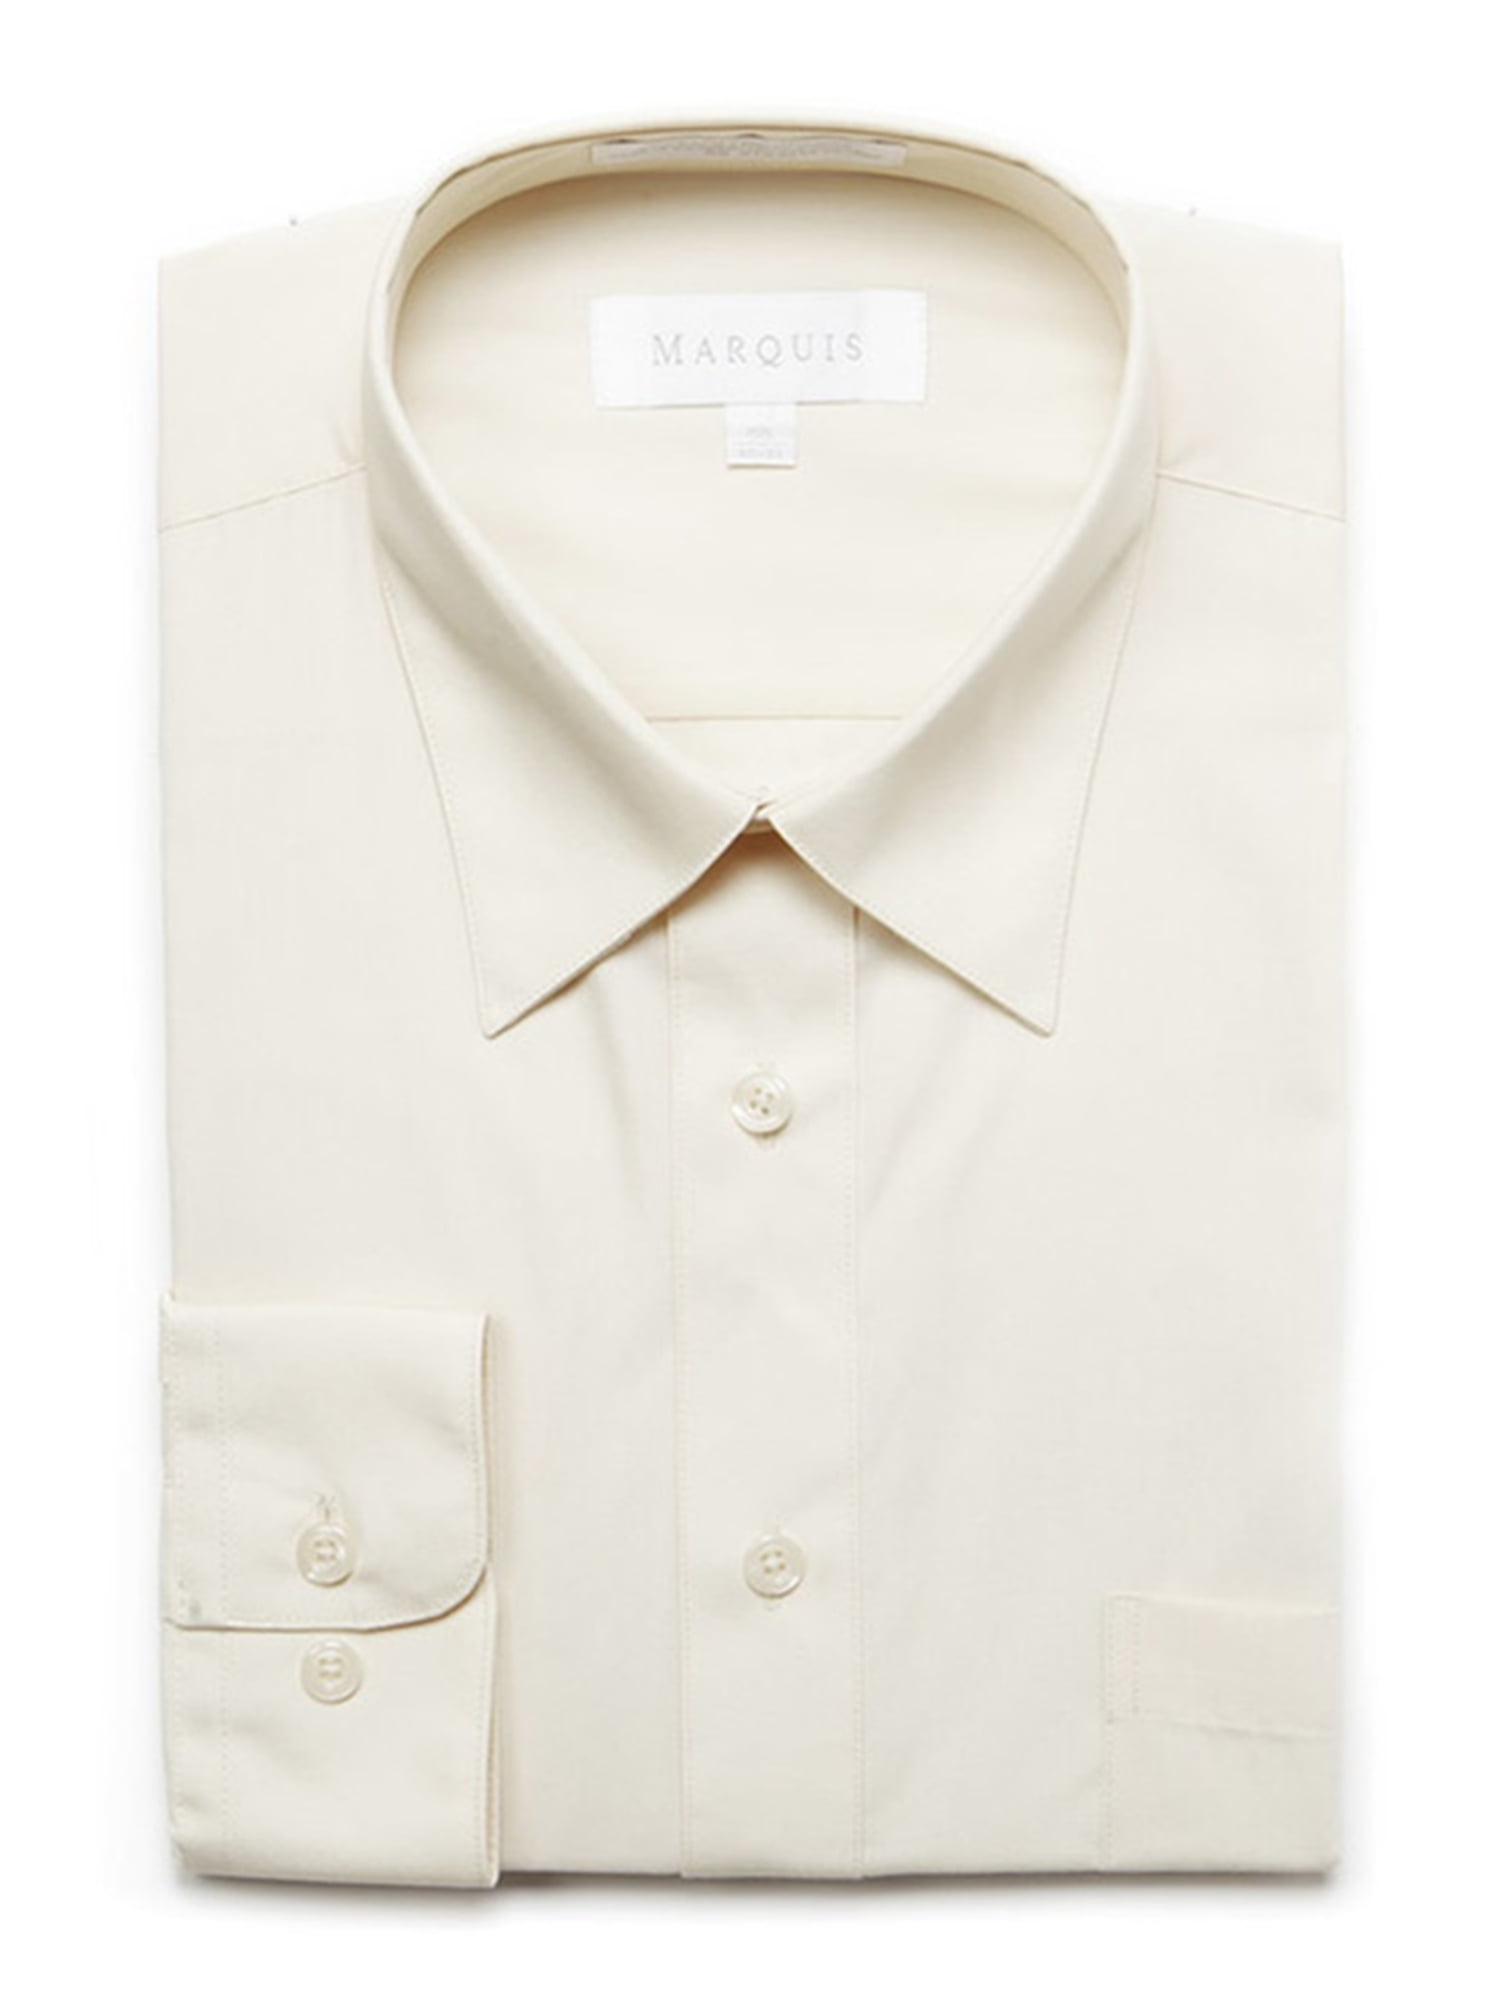 Men’s Woodward & Lothrop Potomac Collection Dress Shirt Size 15.5 short sleeve